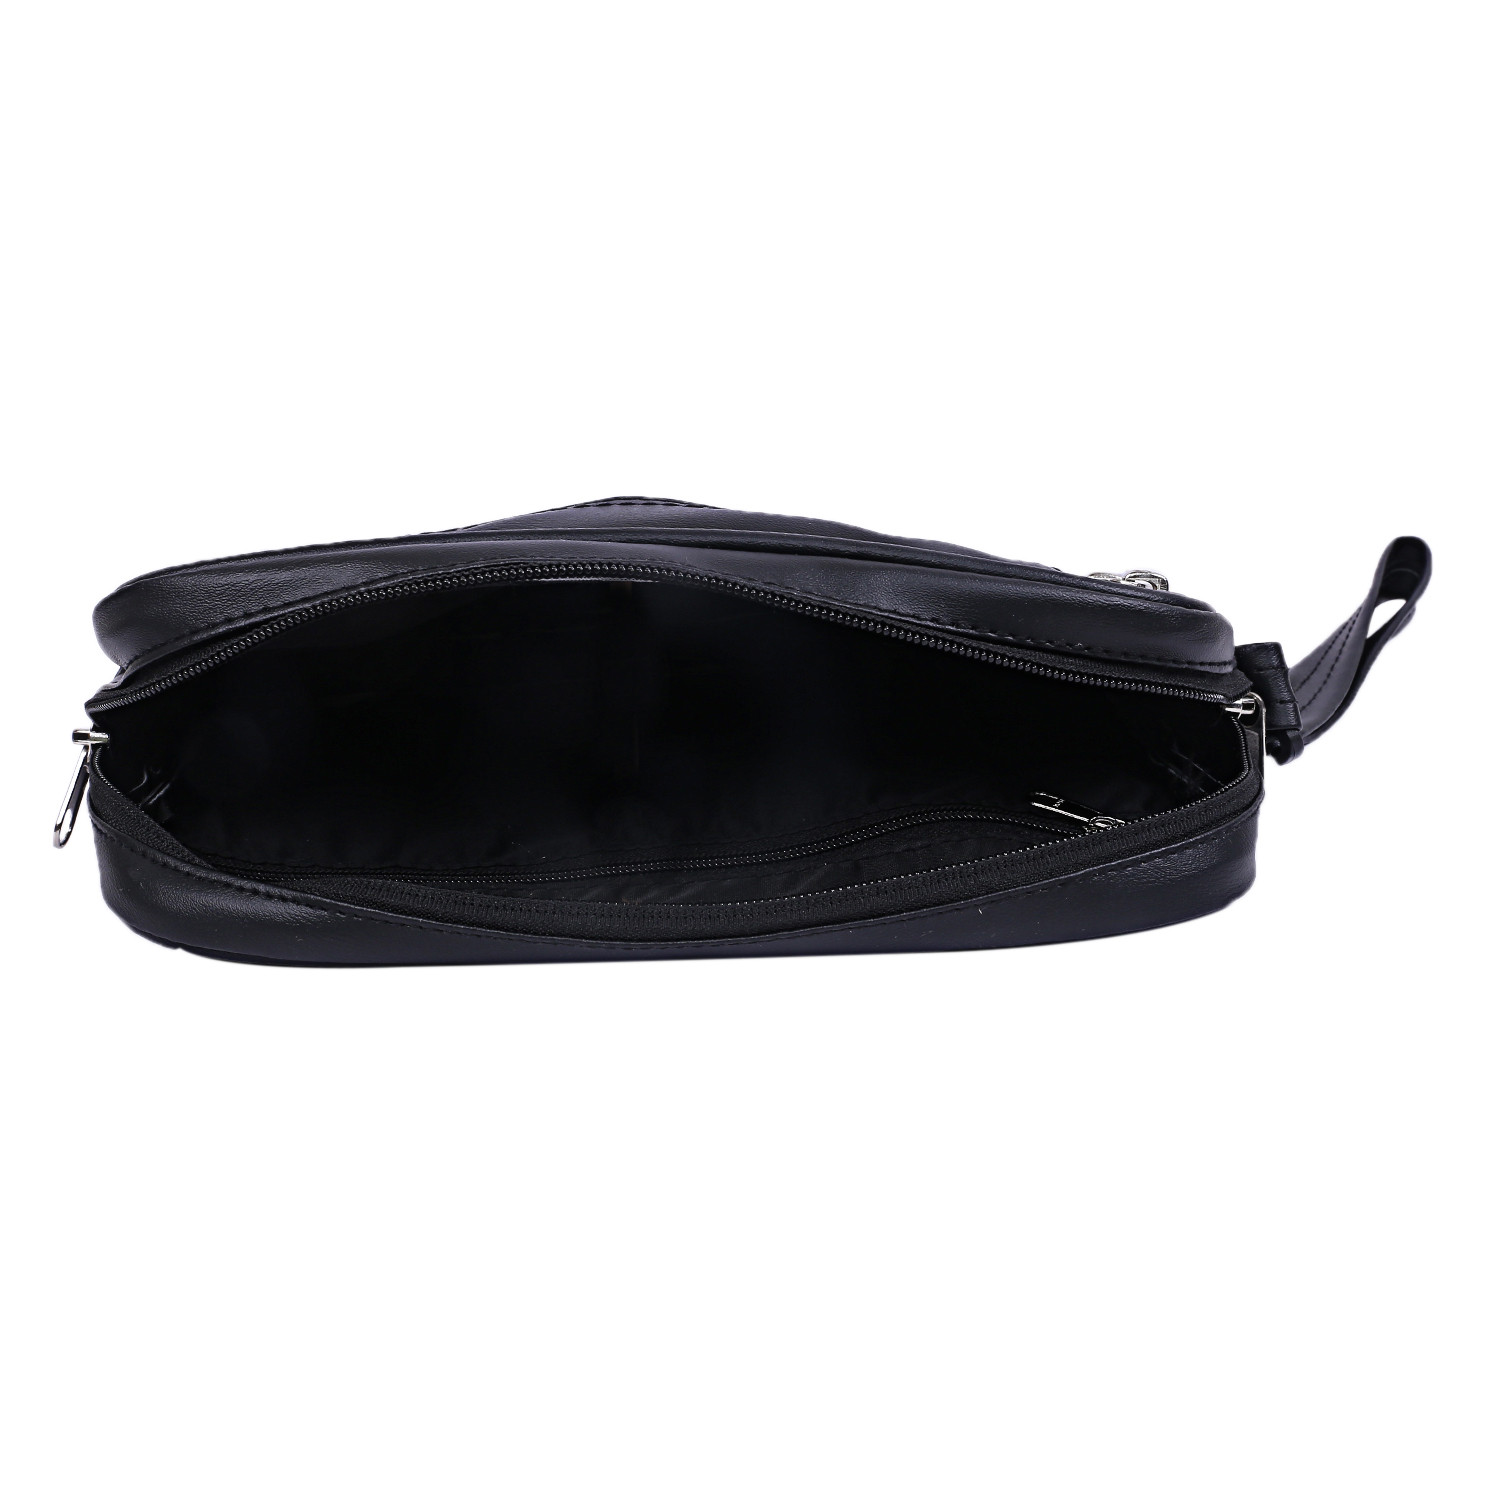 Kuber Industries Multiuses Soft Lether Messenger Bag/Toilerty Bag For Travel, Office, Business (Black)